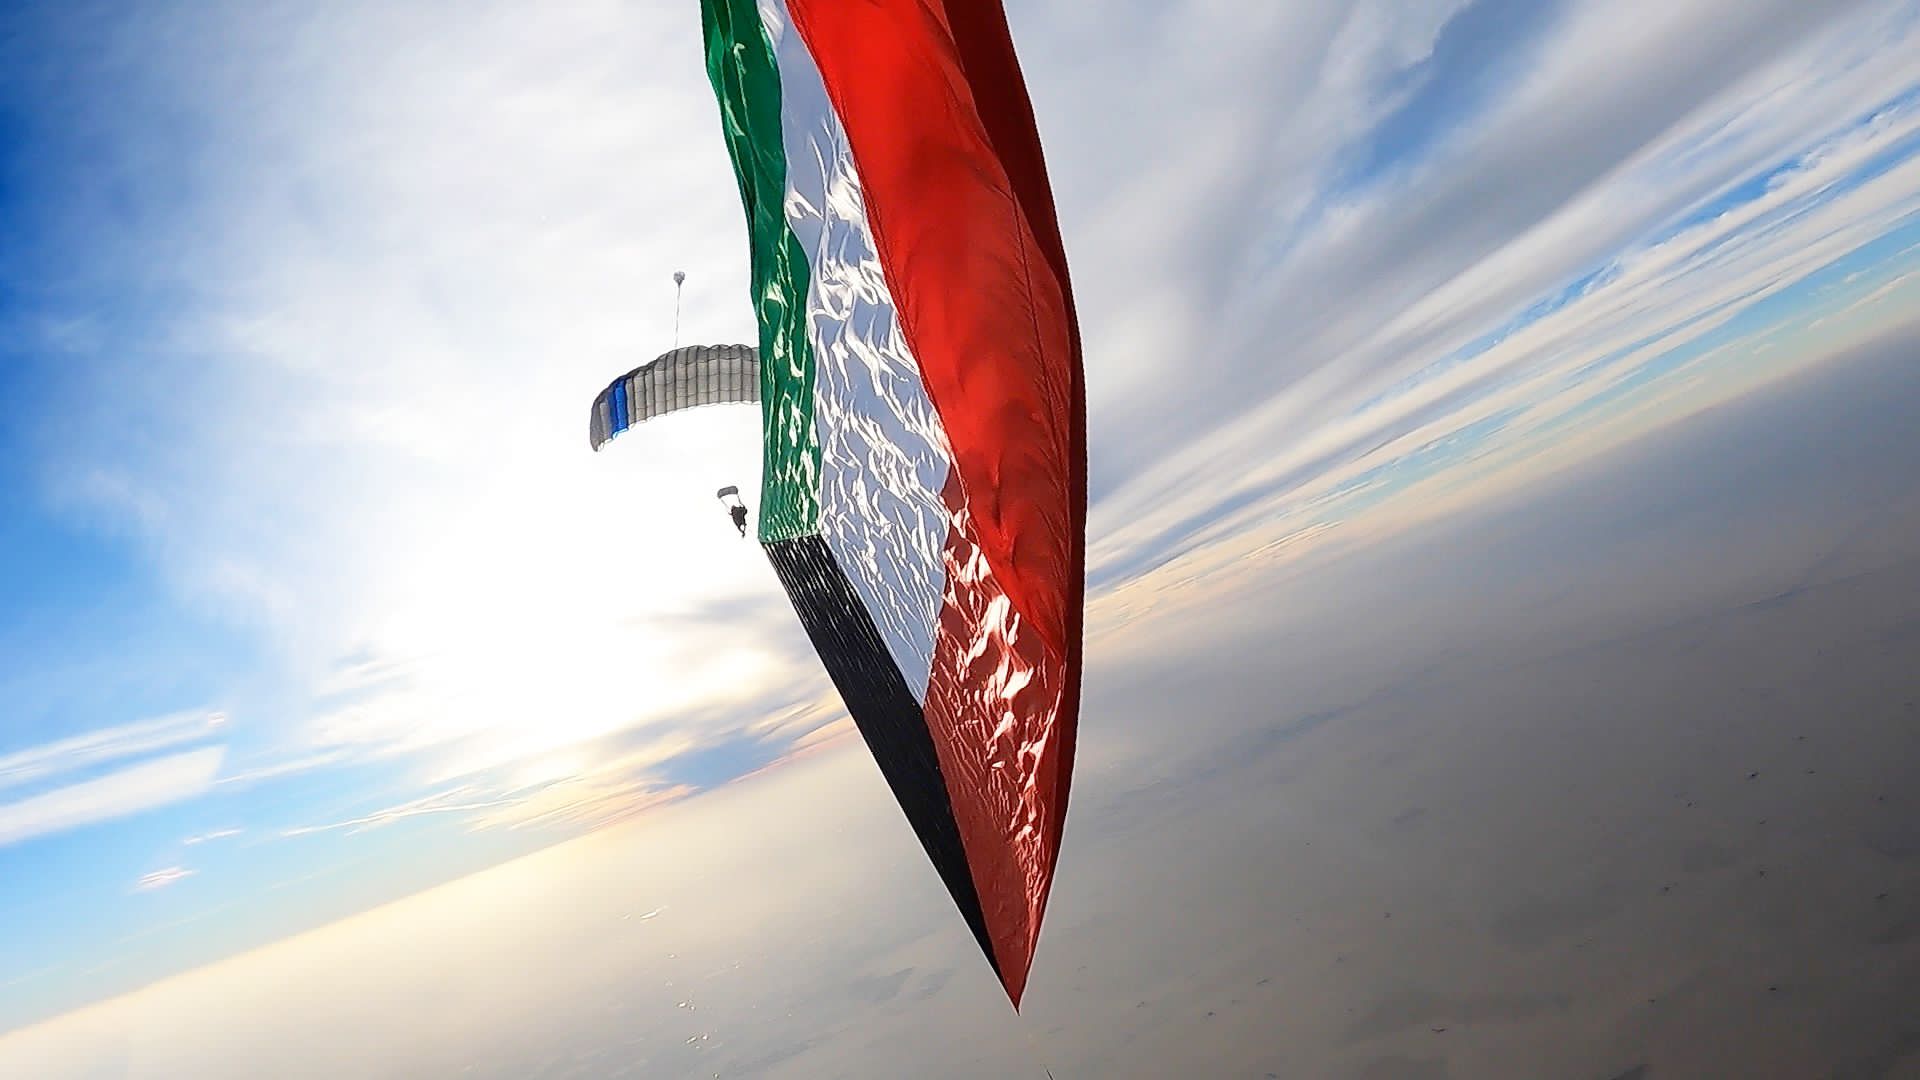 Parachutist Ibrahim Al-Rubaian